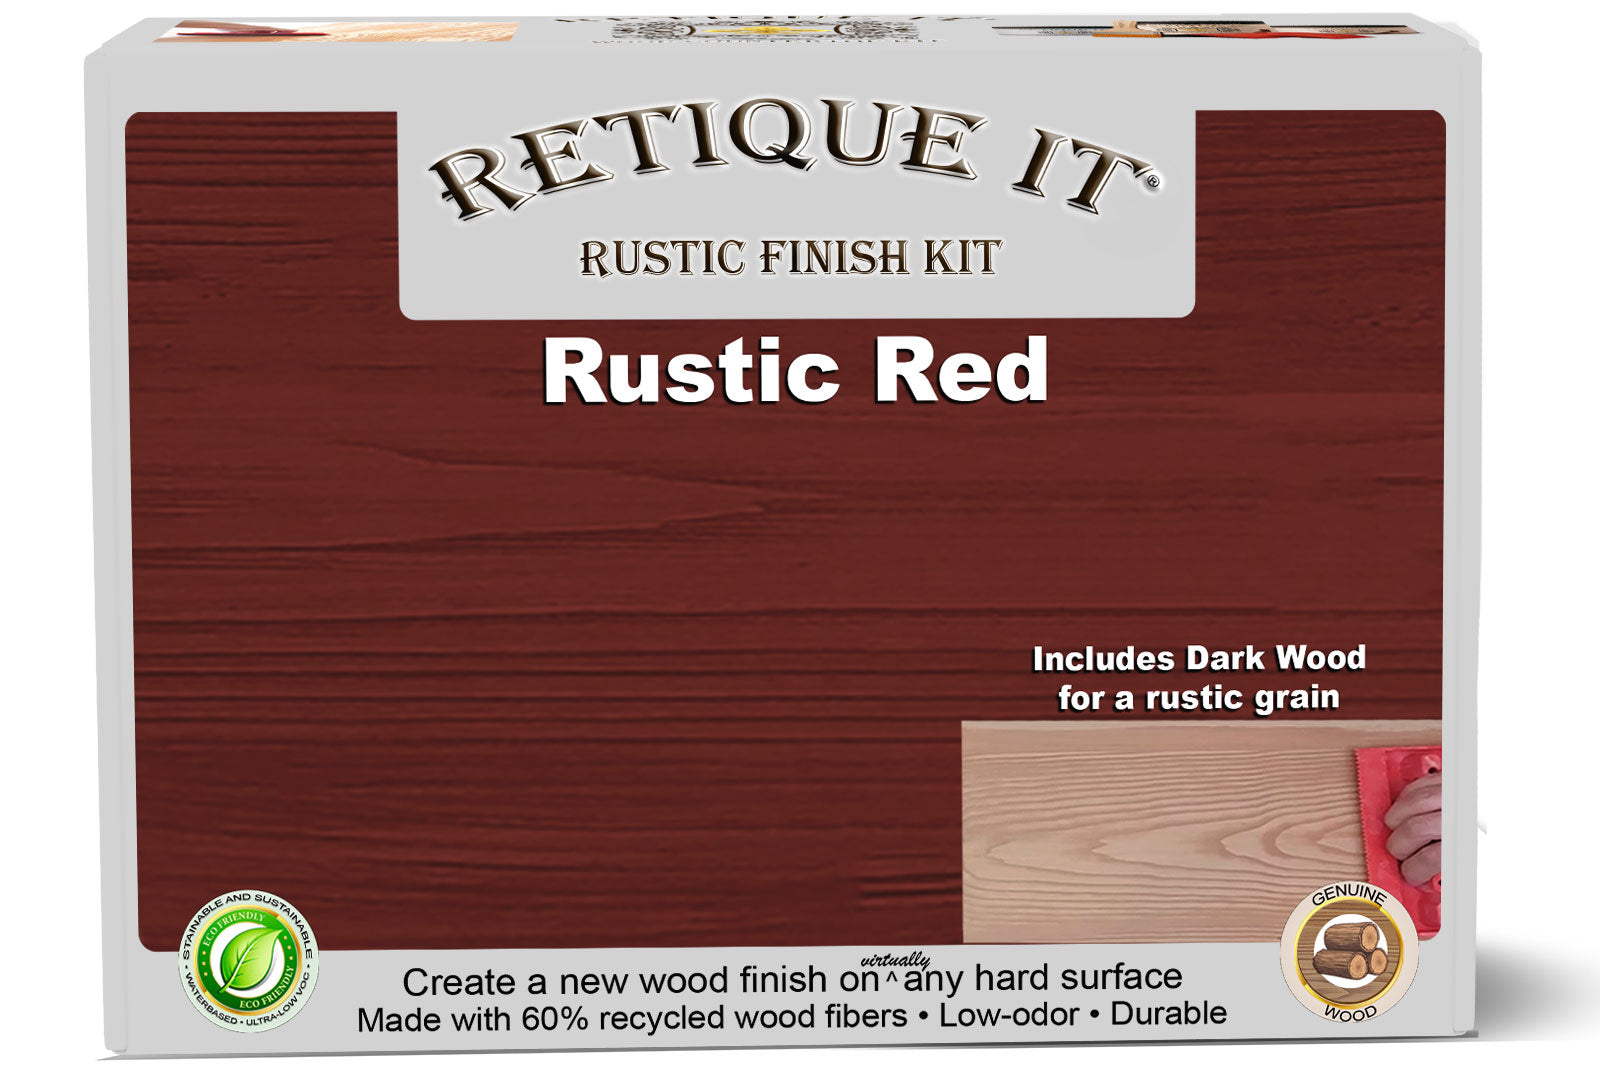 Rustic Finish Kit - Rustic Red